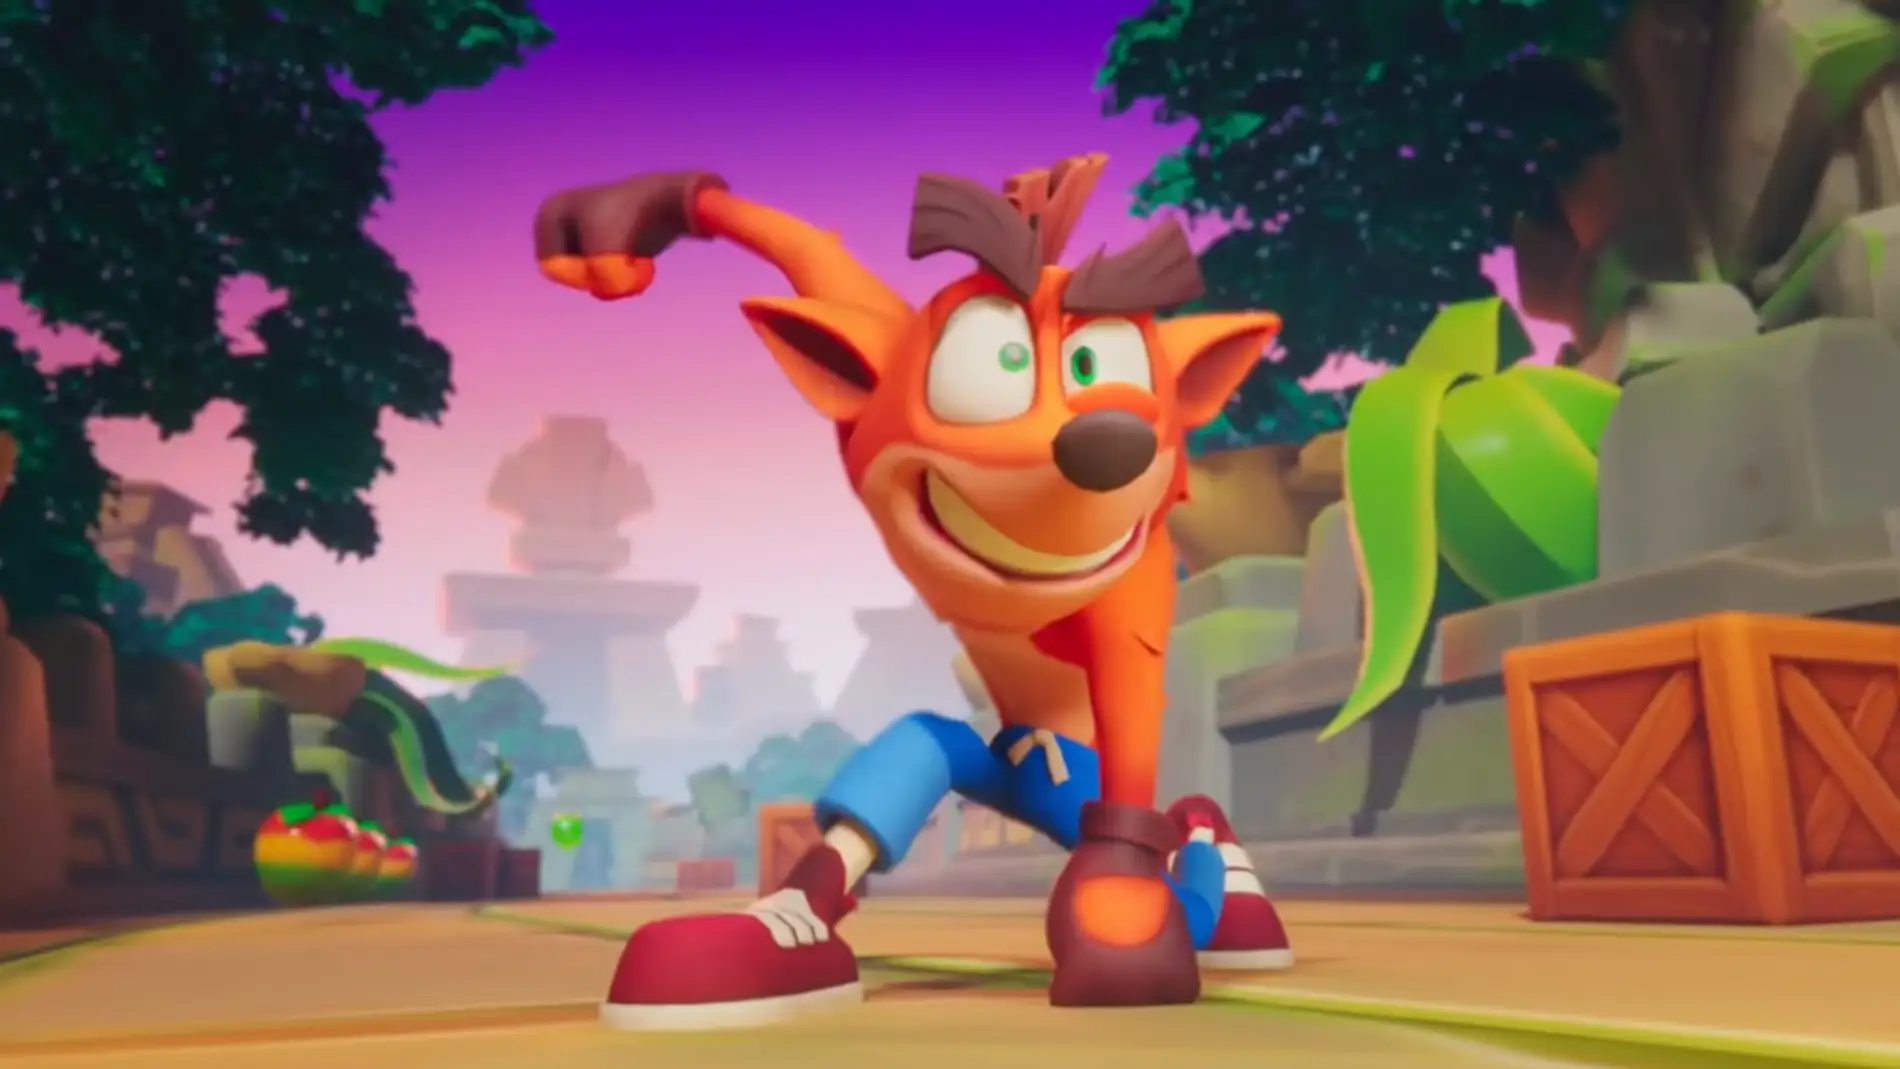 Crash Bandicoot On the Run!